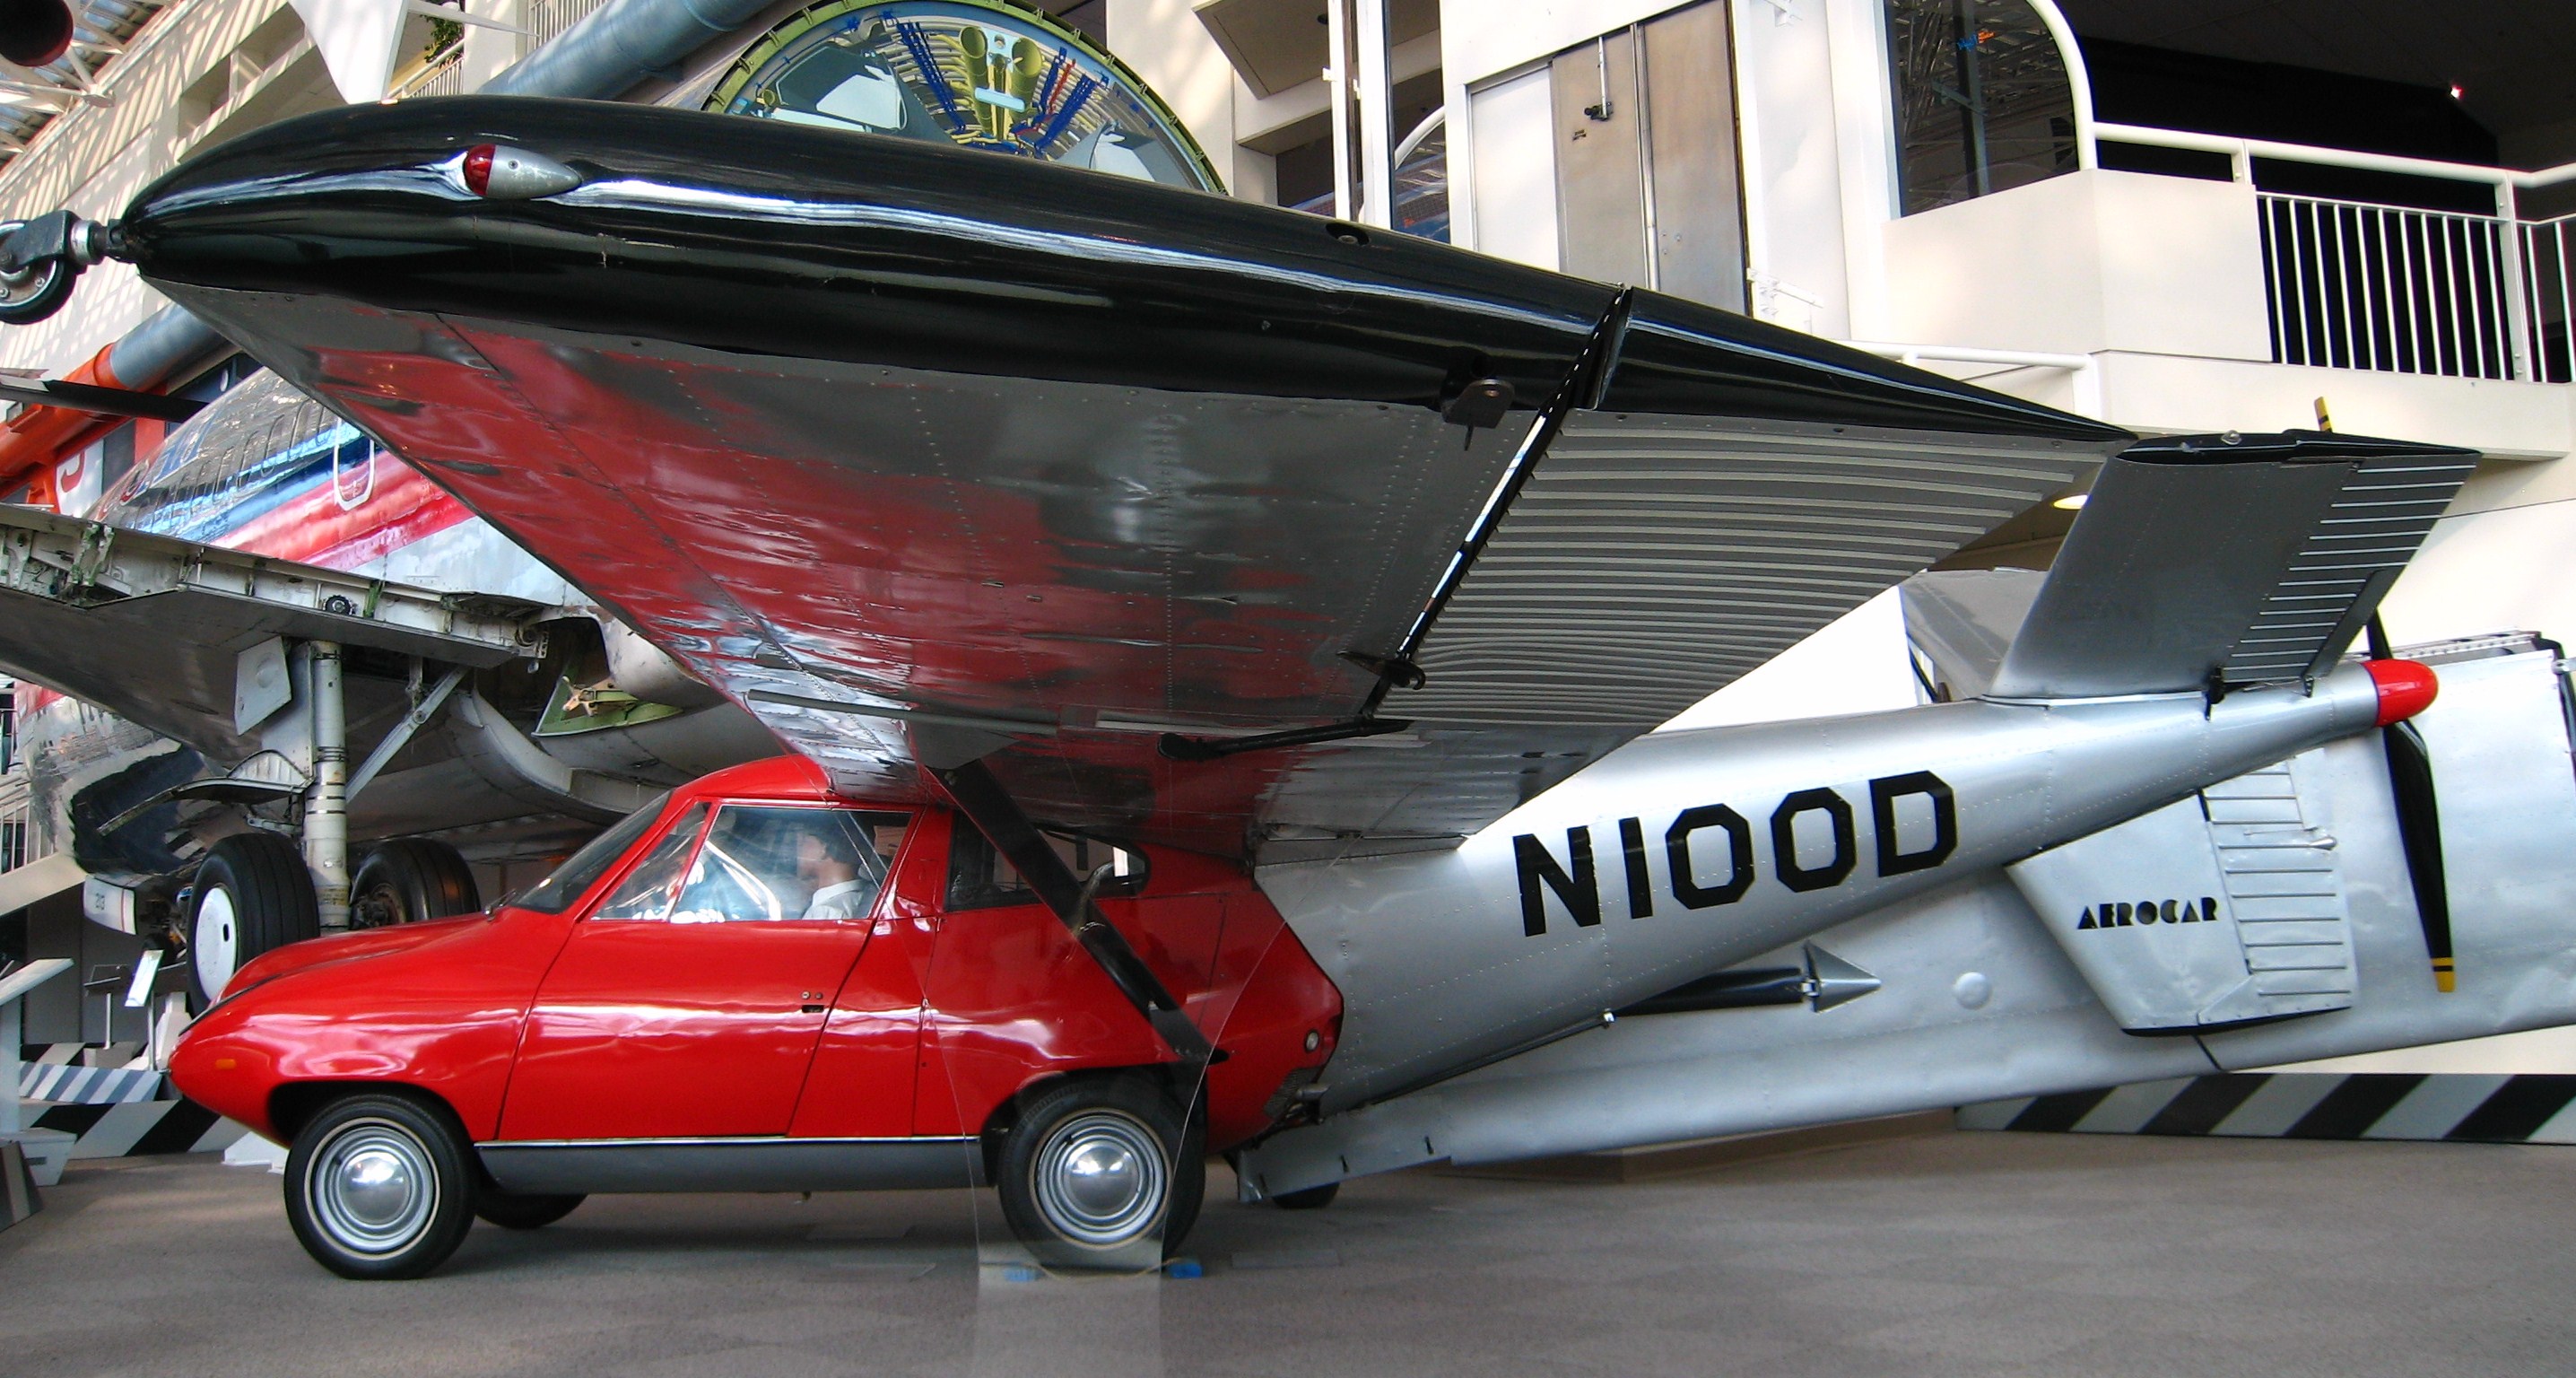 Aerocar - Lấy cảm hứng từ Airphibian của Robert Fulton, chiếc xe bay do Moulton 